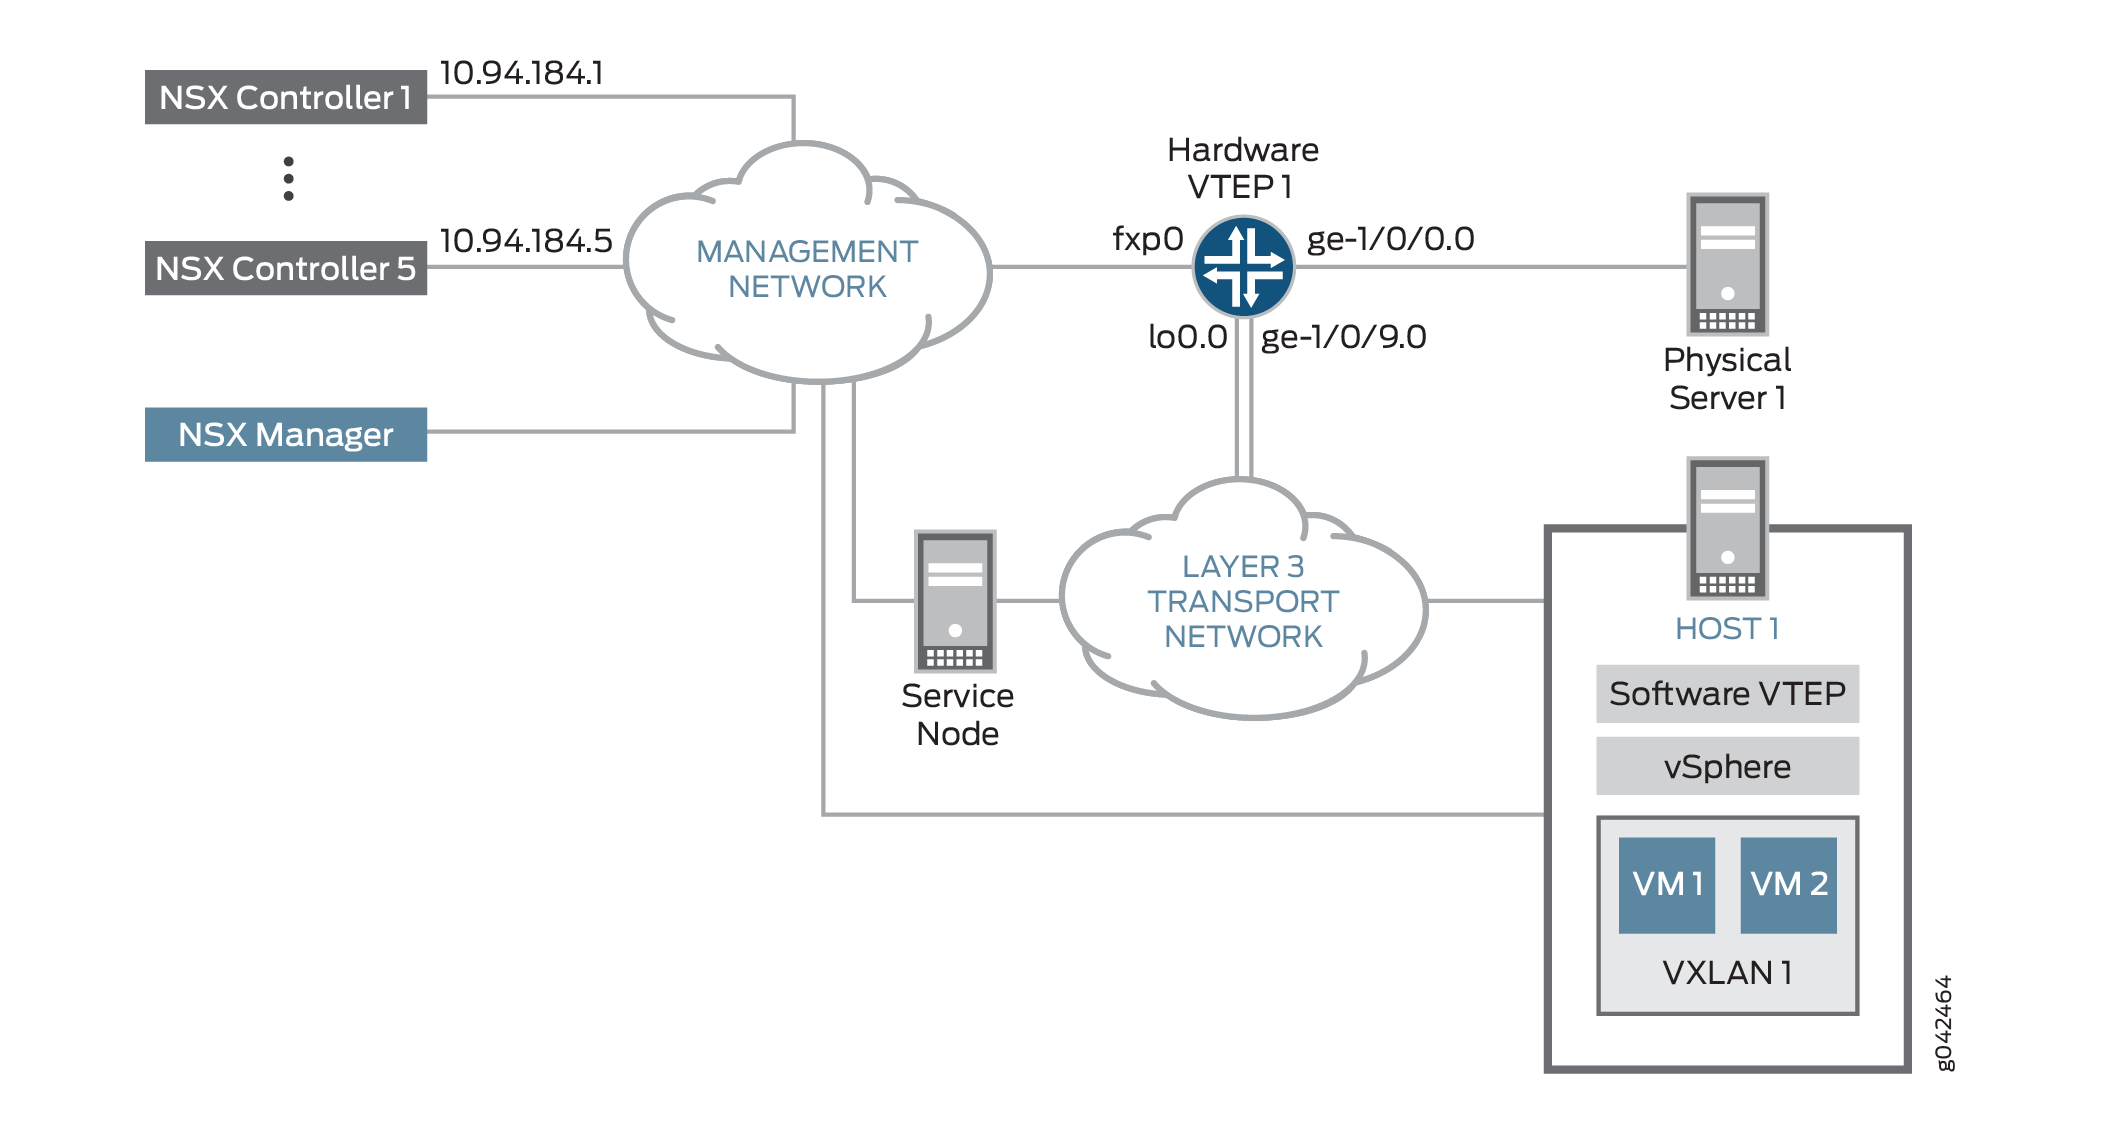 Integration of Juniper Networks Device into NSX for vSphere Environment